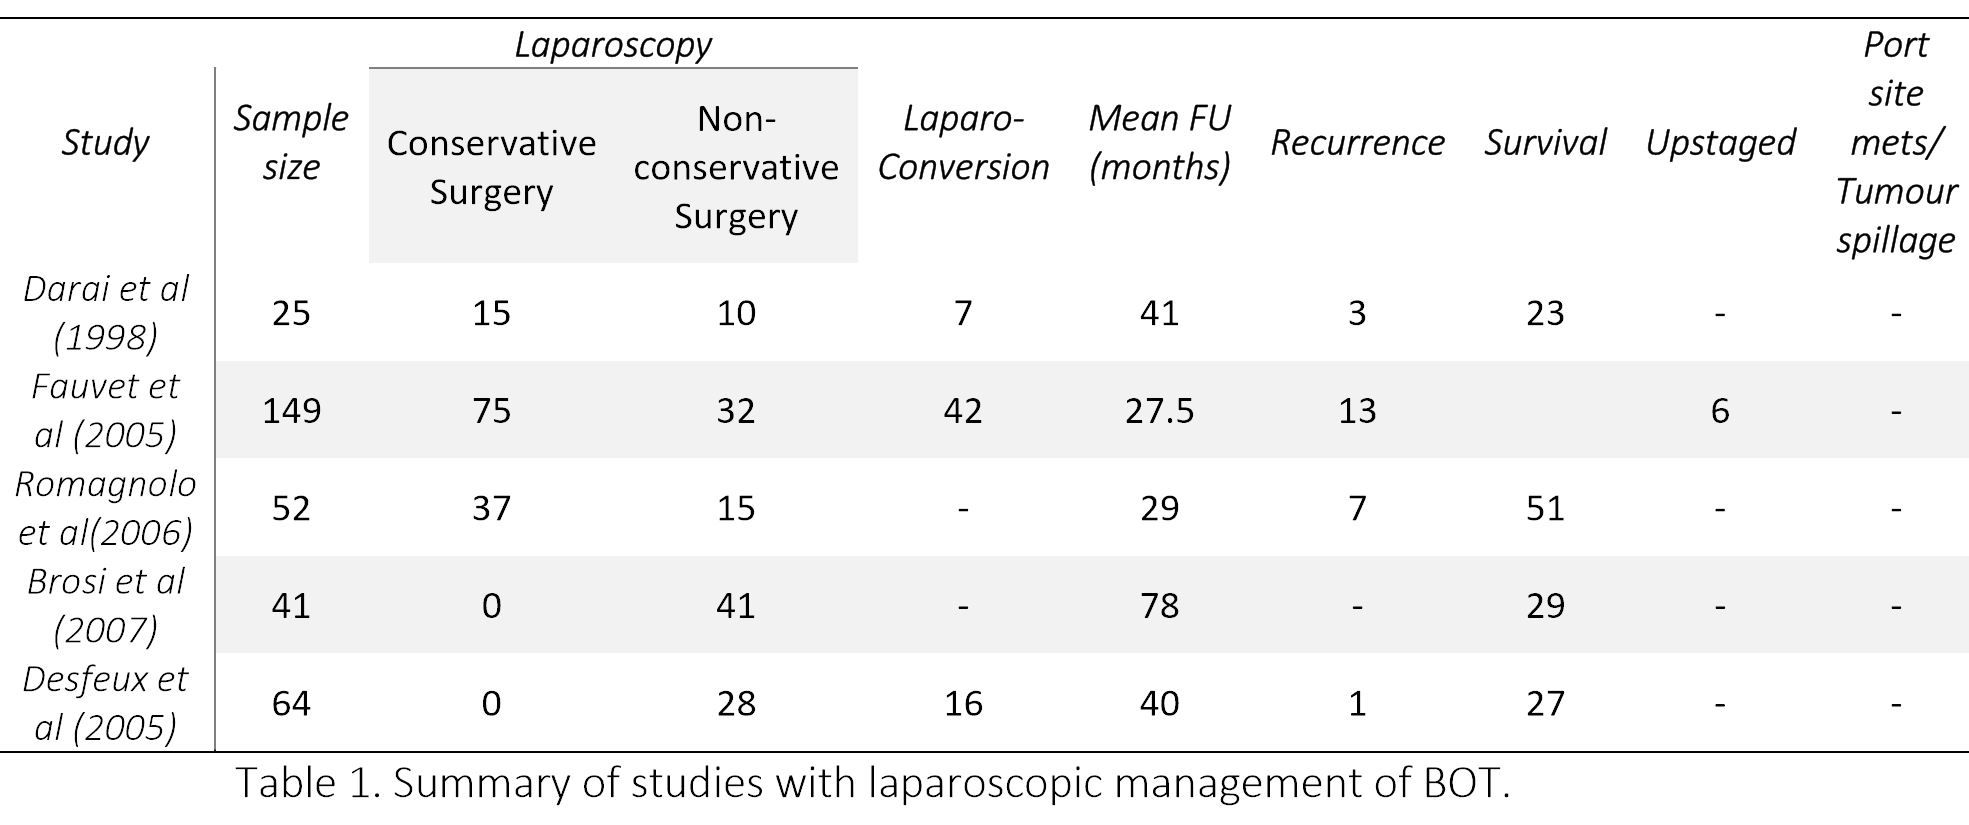  Summary of studies with laparoscopic management of BOT